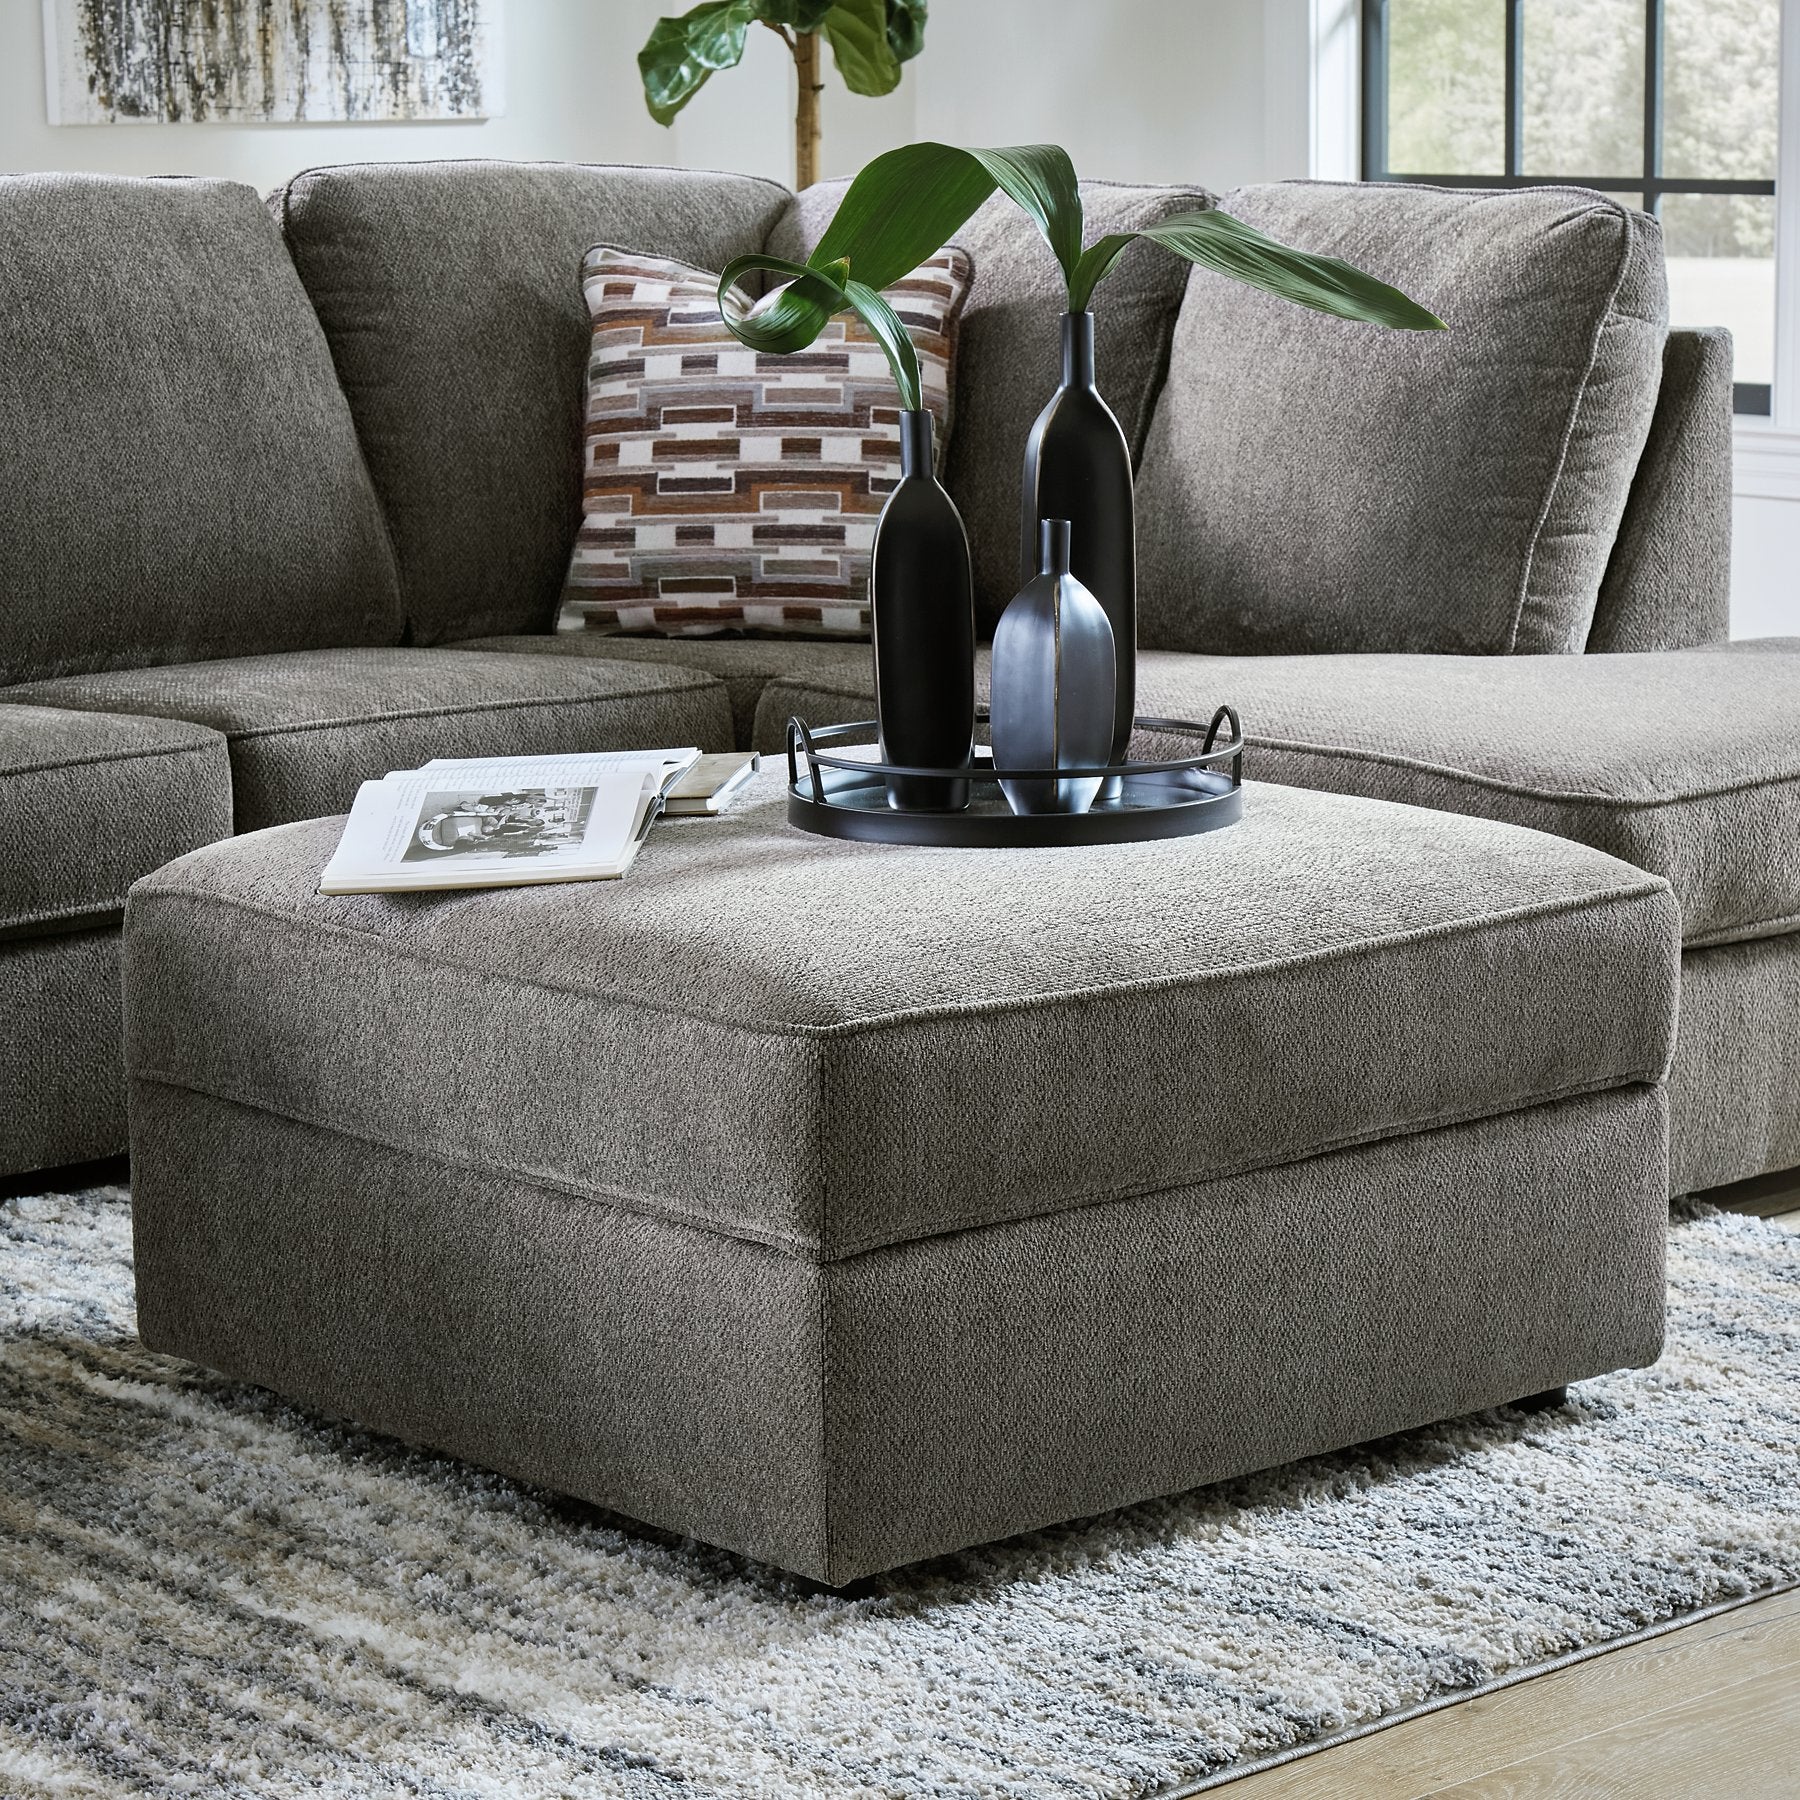 O'Phannon Living Room Set - Half Price Furniture